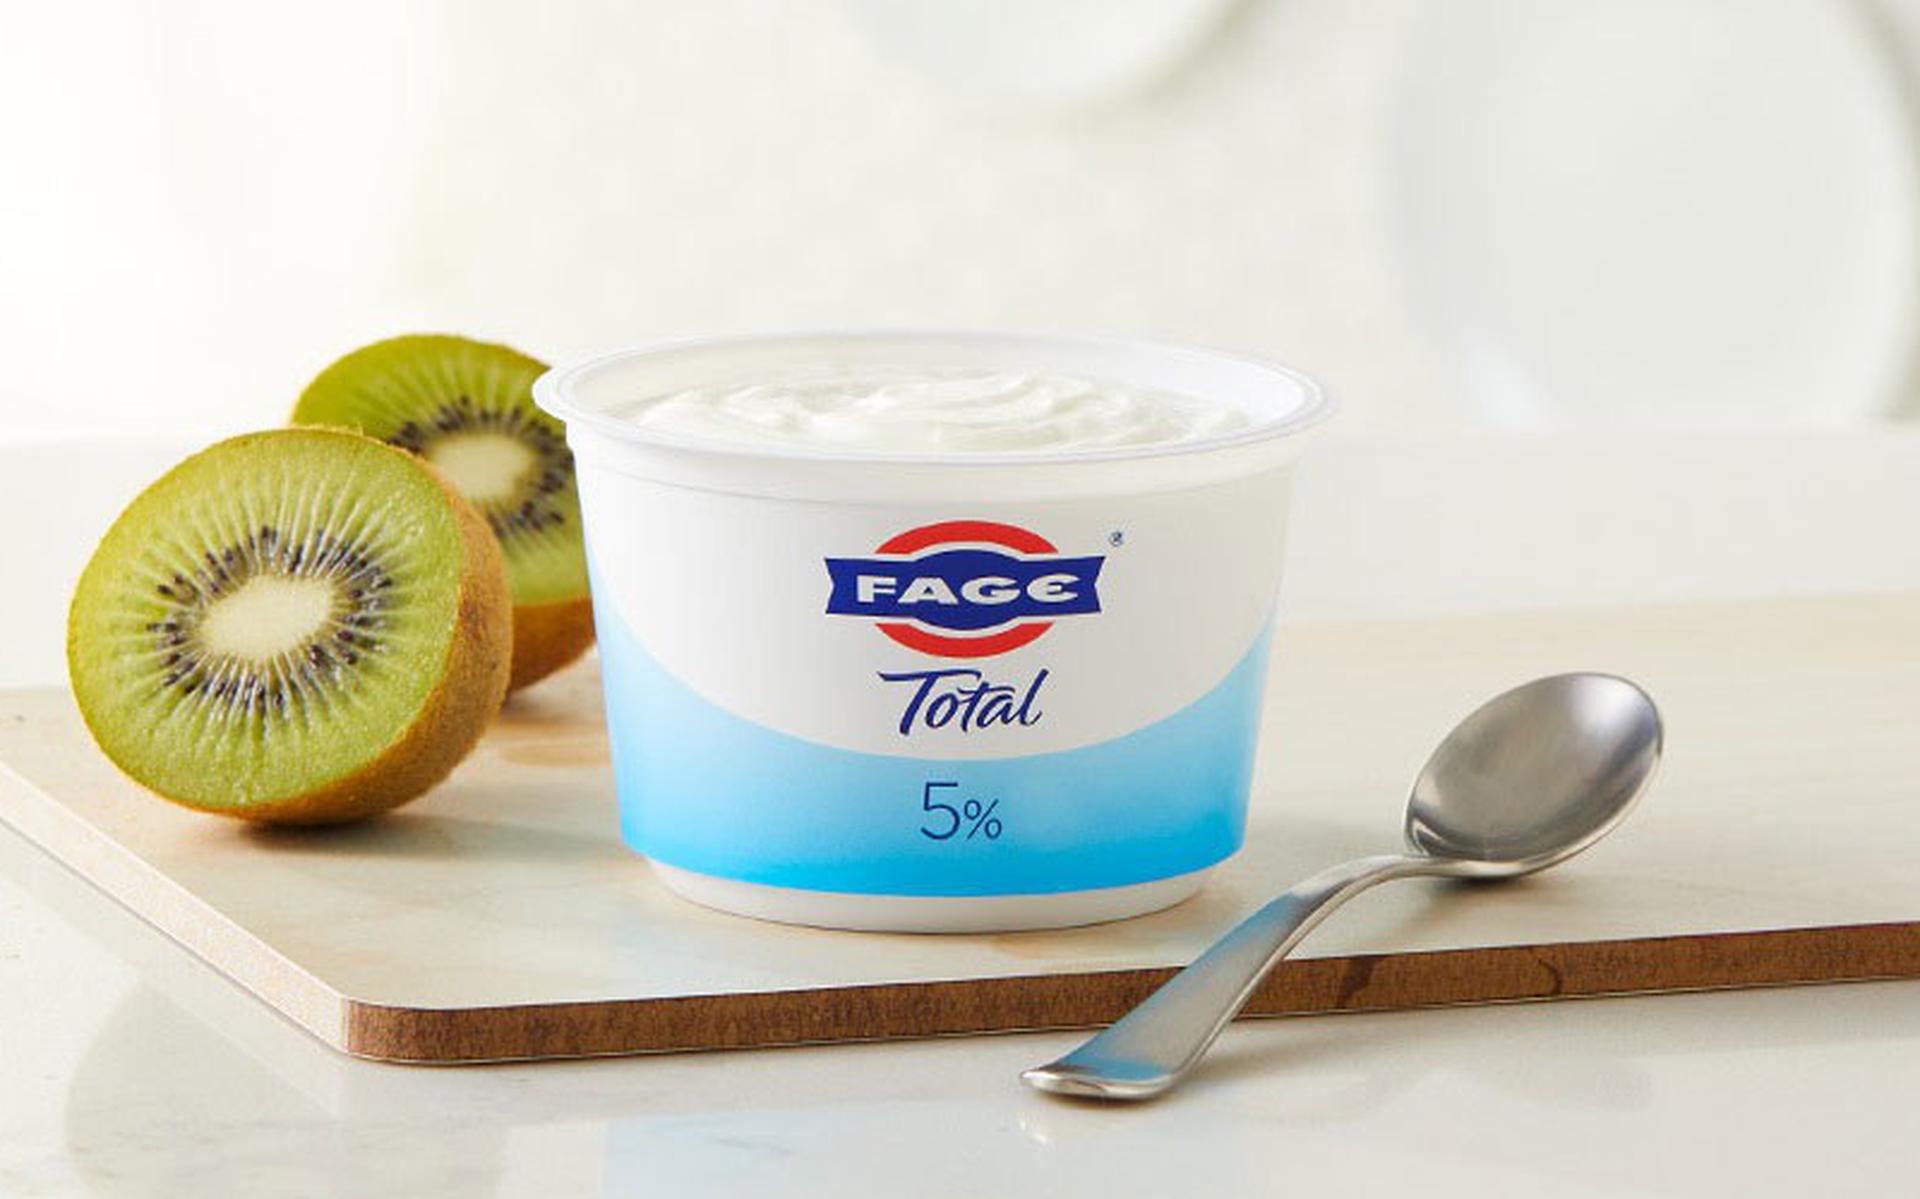 Griekse yoghurt, van Hoogeveense bodem. Binnenkort althans.